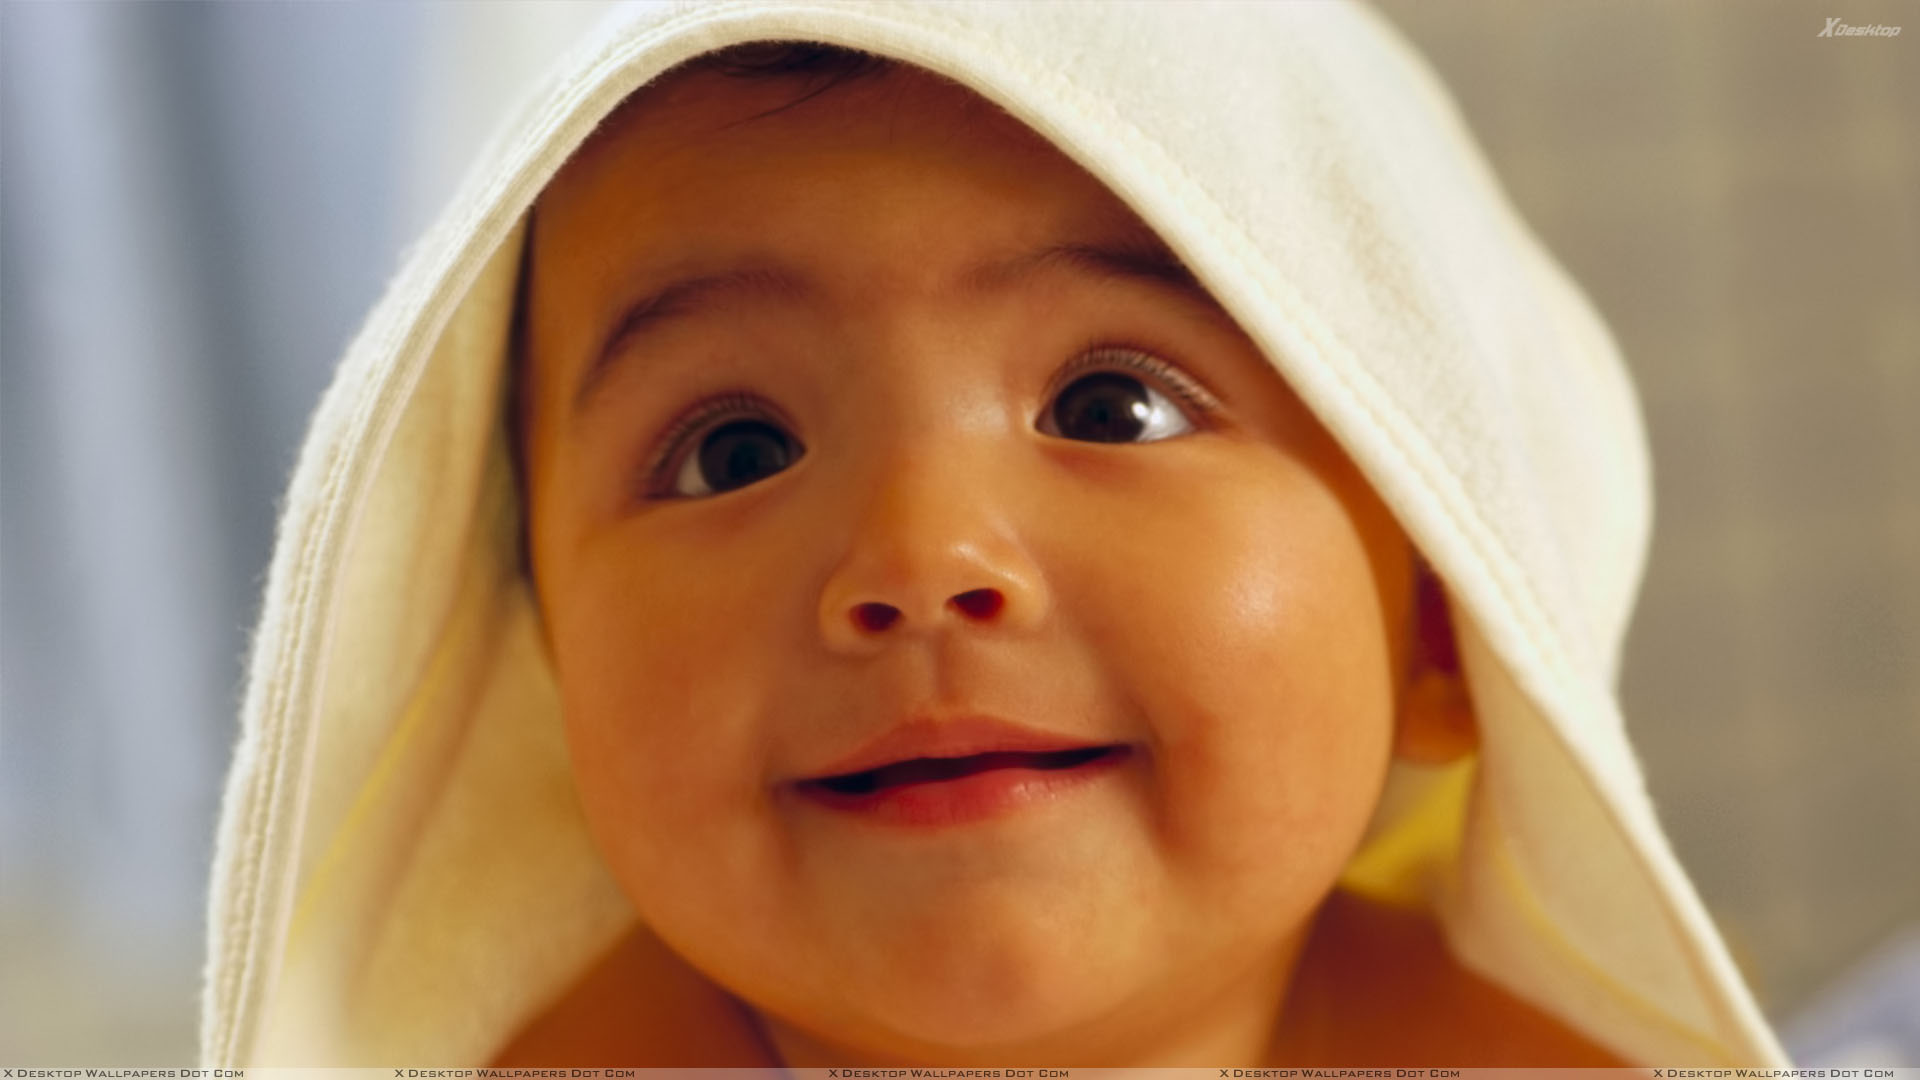 Small Kid Smiling Face Closeup in Towel Wallpaper